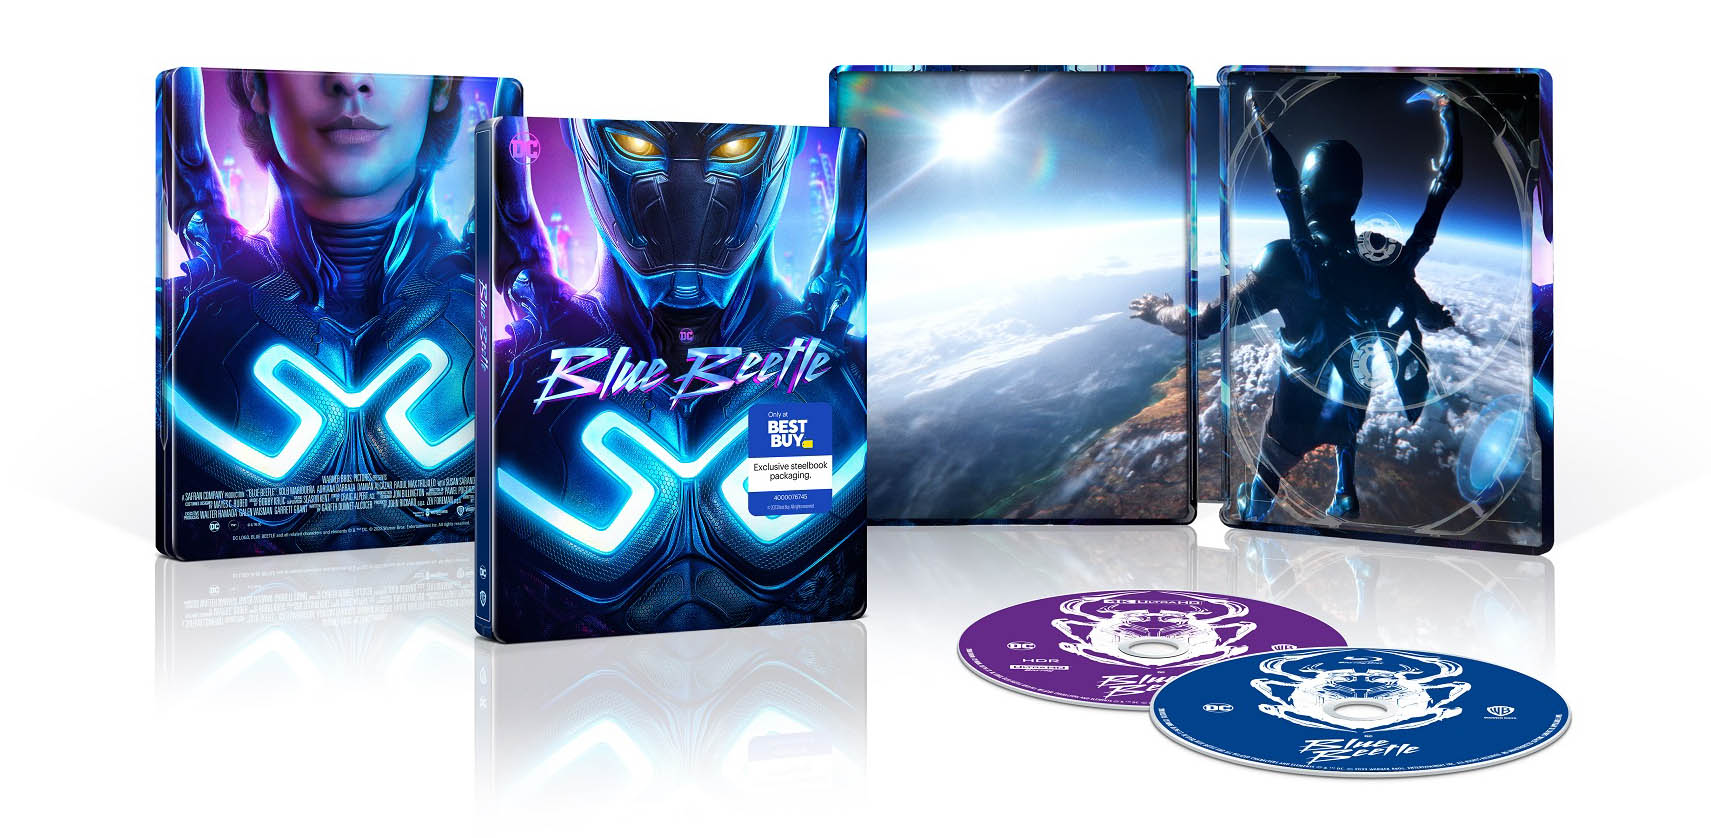 Blue Beetle (2023) 4k Blu-ray Best Buy SteelBook